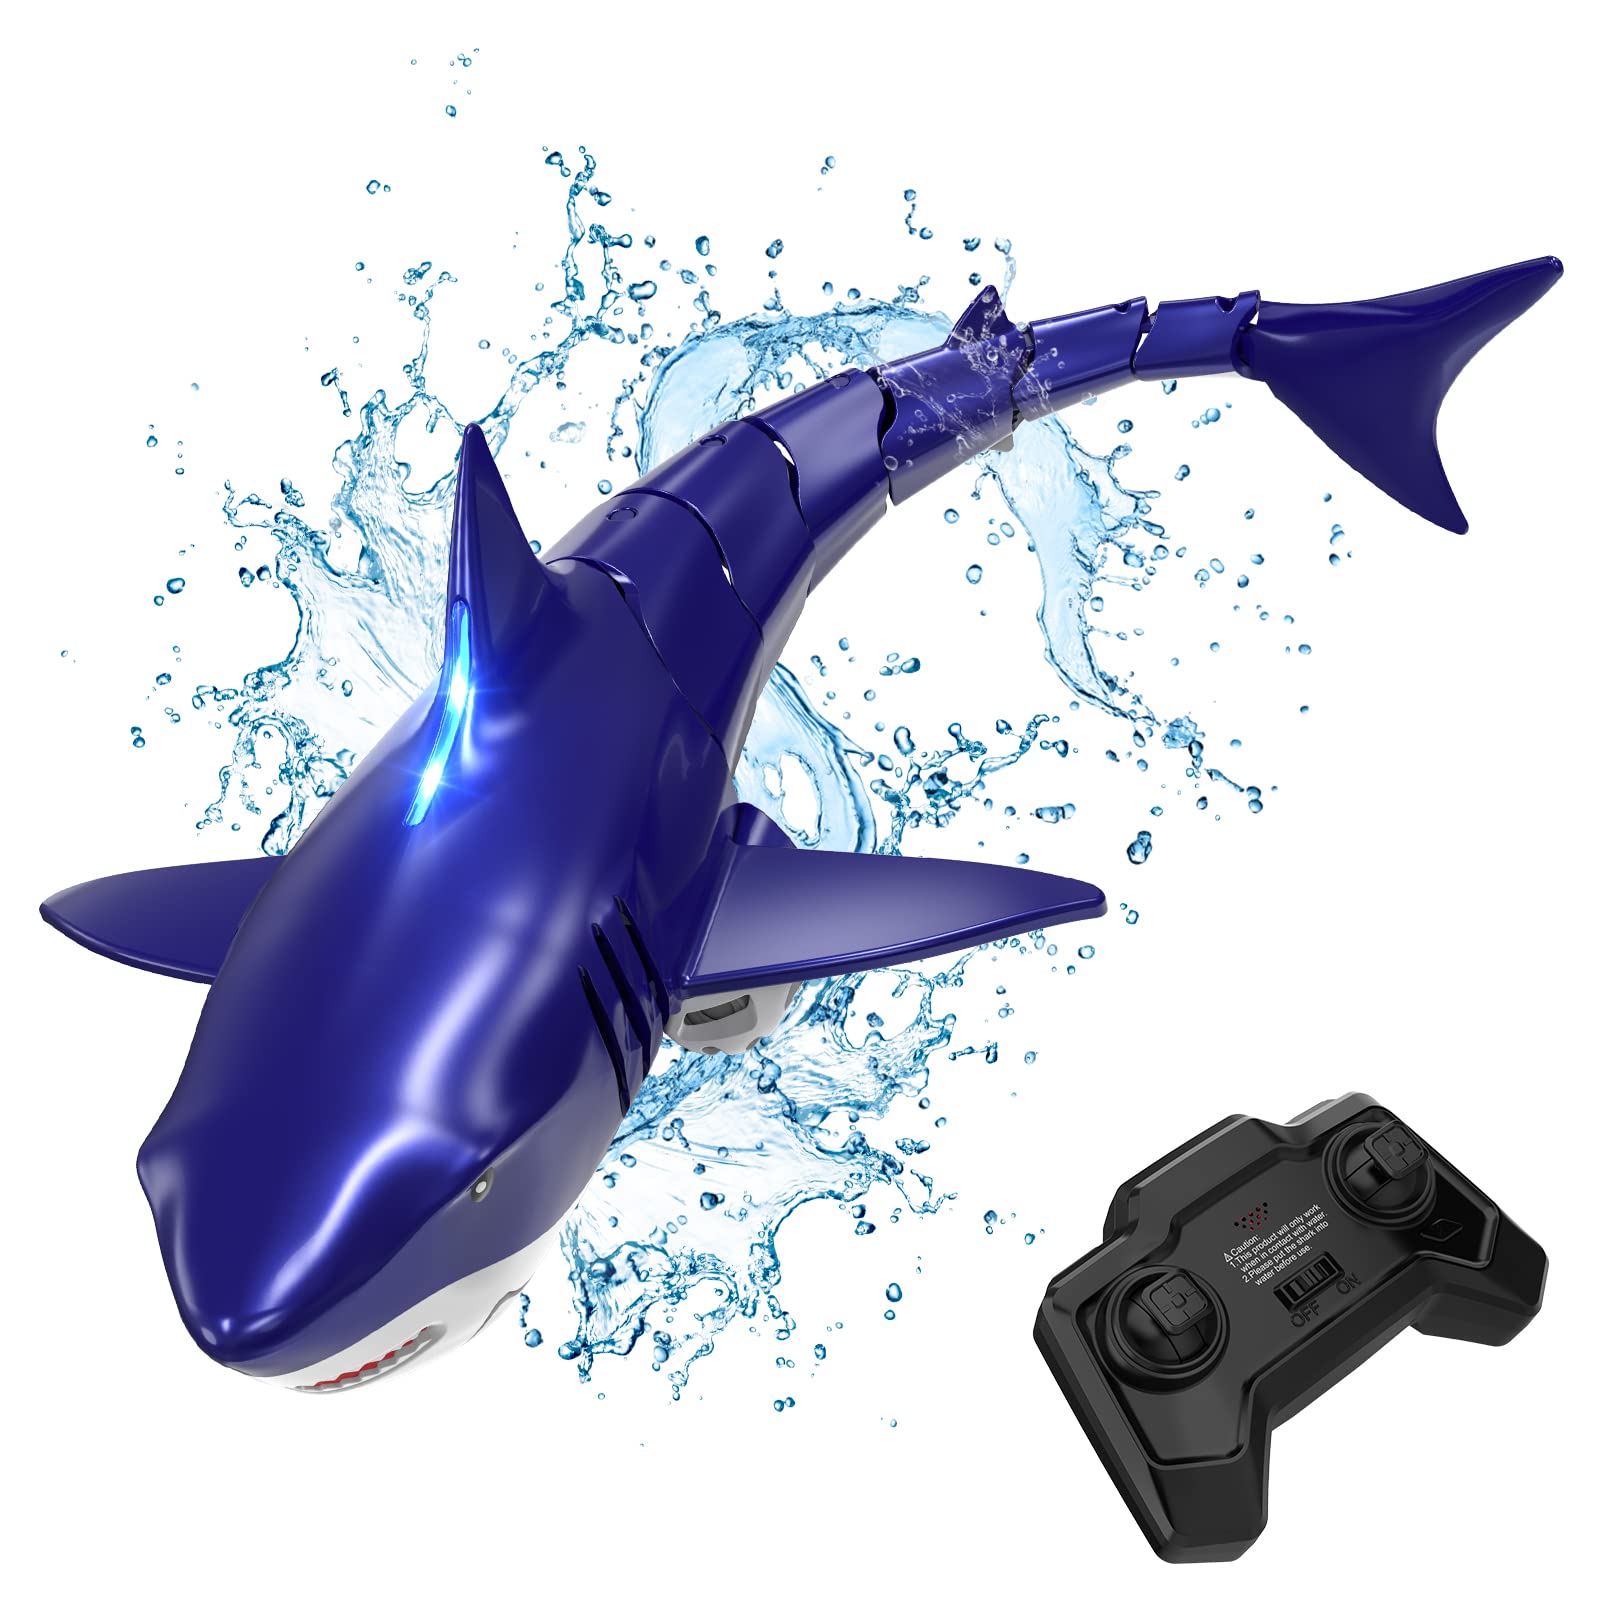 Buy Aomifmik Remote Control Shark Toys for Kids, 2x1000mAh RC Boat ...